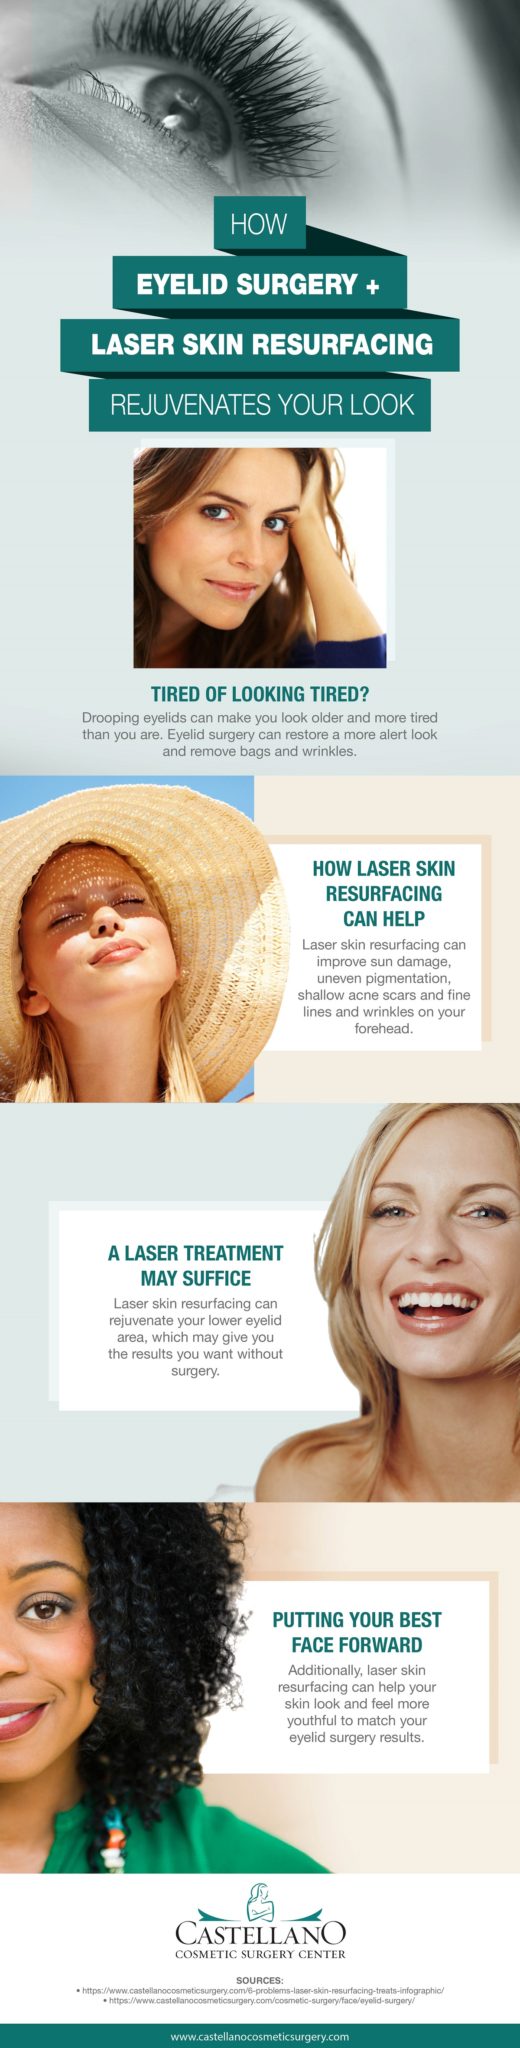 eyelid surgery co2 laser resurfacing